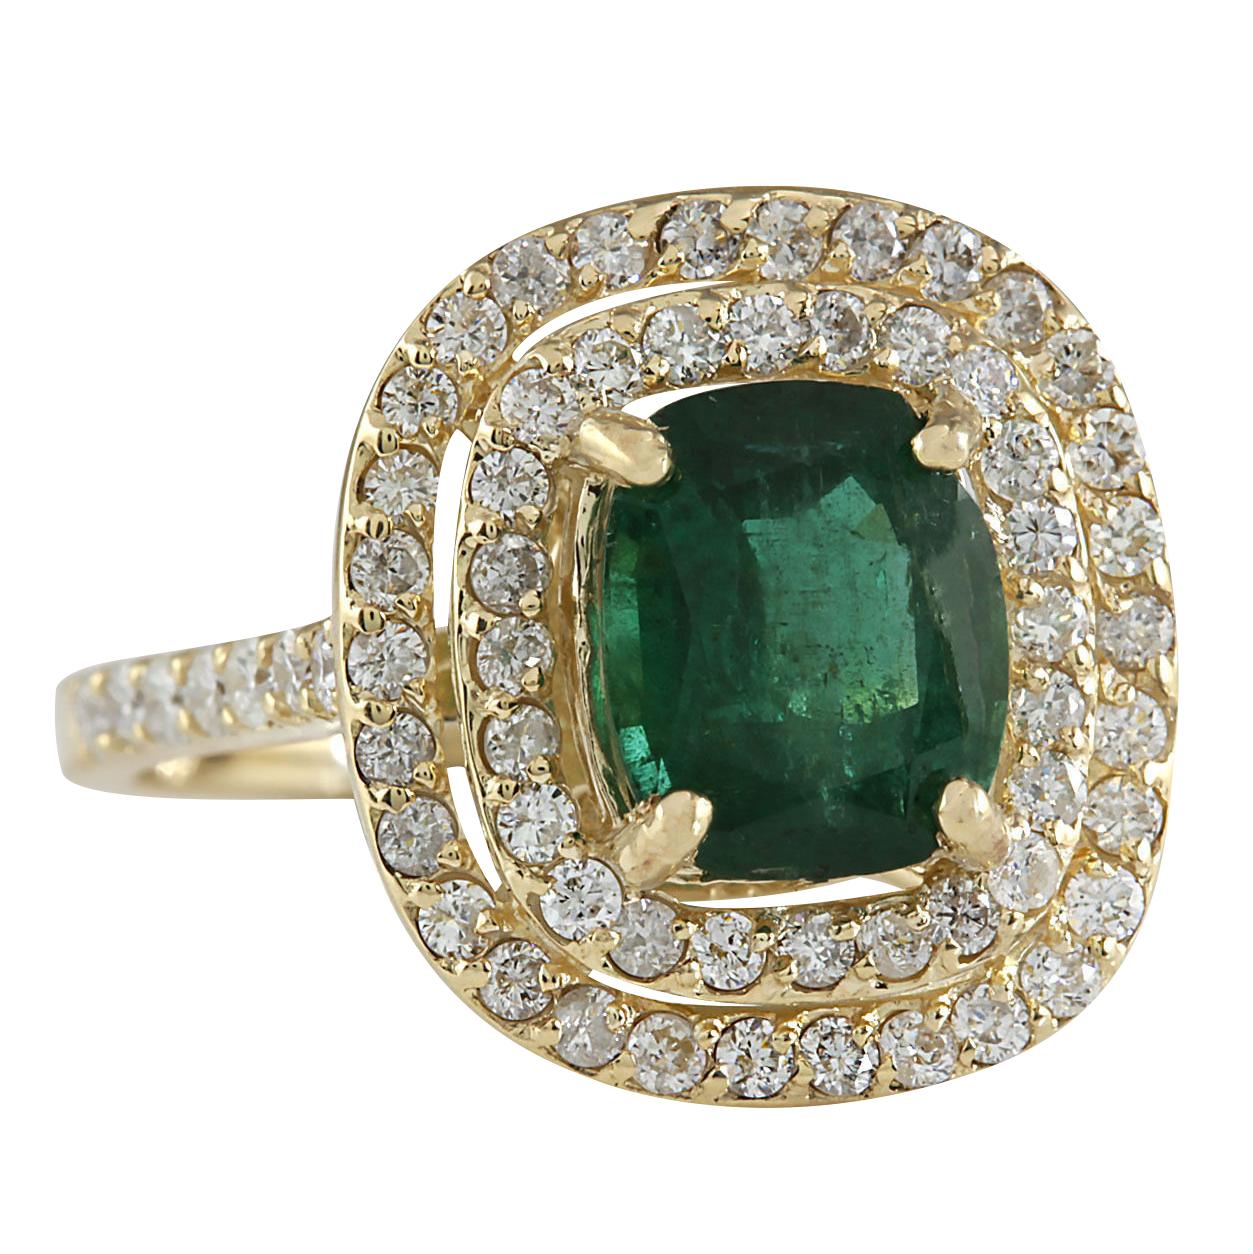 3.03 Carat Natural Emerald 14 Karat Yellow Gold Diamond Ring
Stamped: 14K Yellow Gold
Total Ring Weight: 5.2 Grams
Total Natural Emerald Weight is 2.03 Carat (Measures: 9.00x7.00 mm)
Color: Green
Total Natural Diamond Weight is 1.00 Carat
Color: